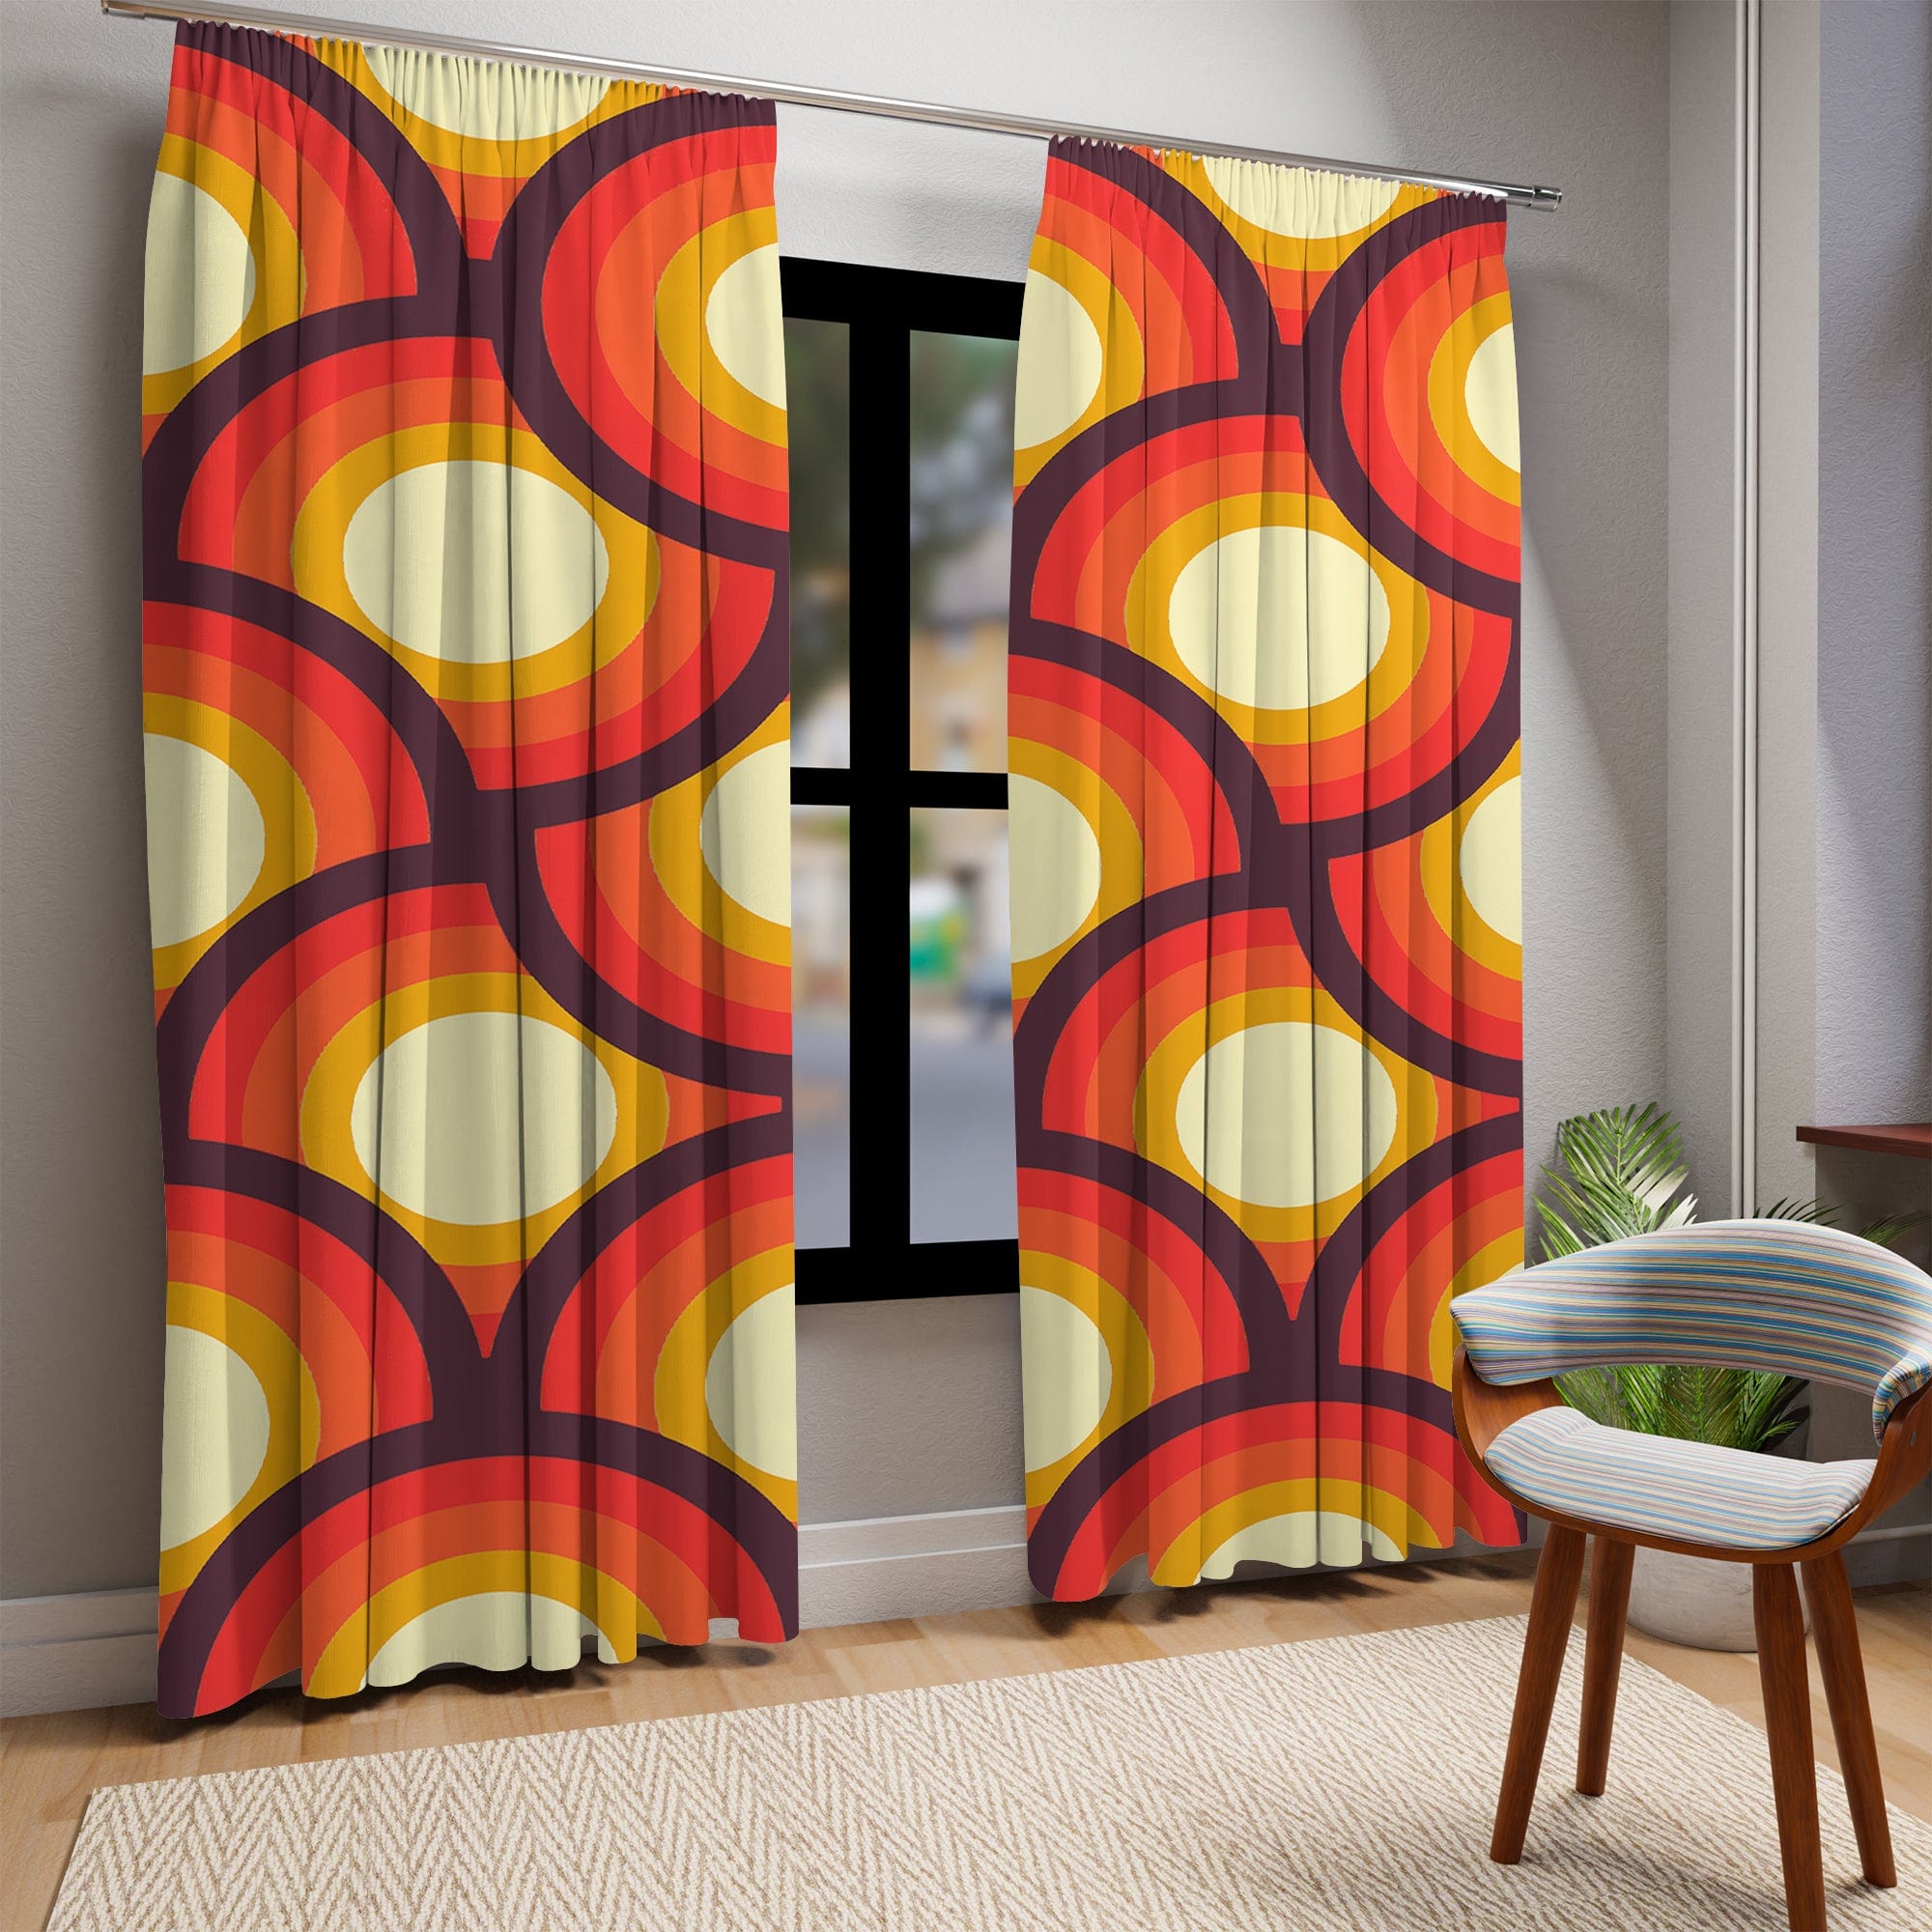 Kate McEnroe New York Blackout &amp; Sheer Window Curtains in Mid Century Modern Geometric CirclesWindow CurtainsCurtainSheer - 50x84 - DoublePanel - 20220710155527517